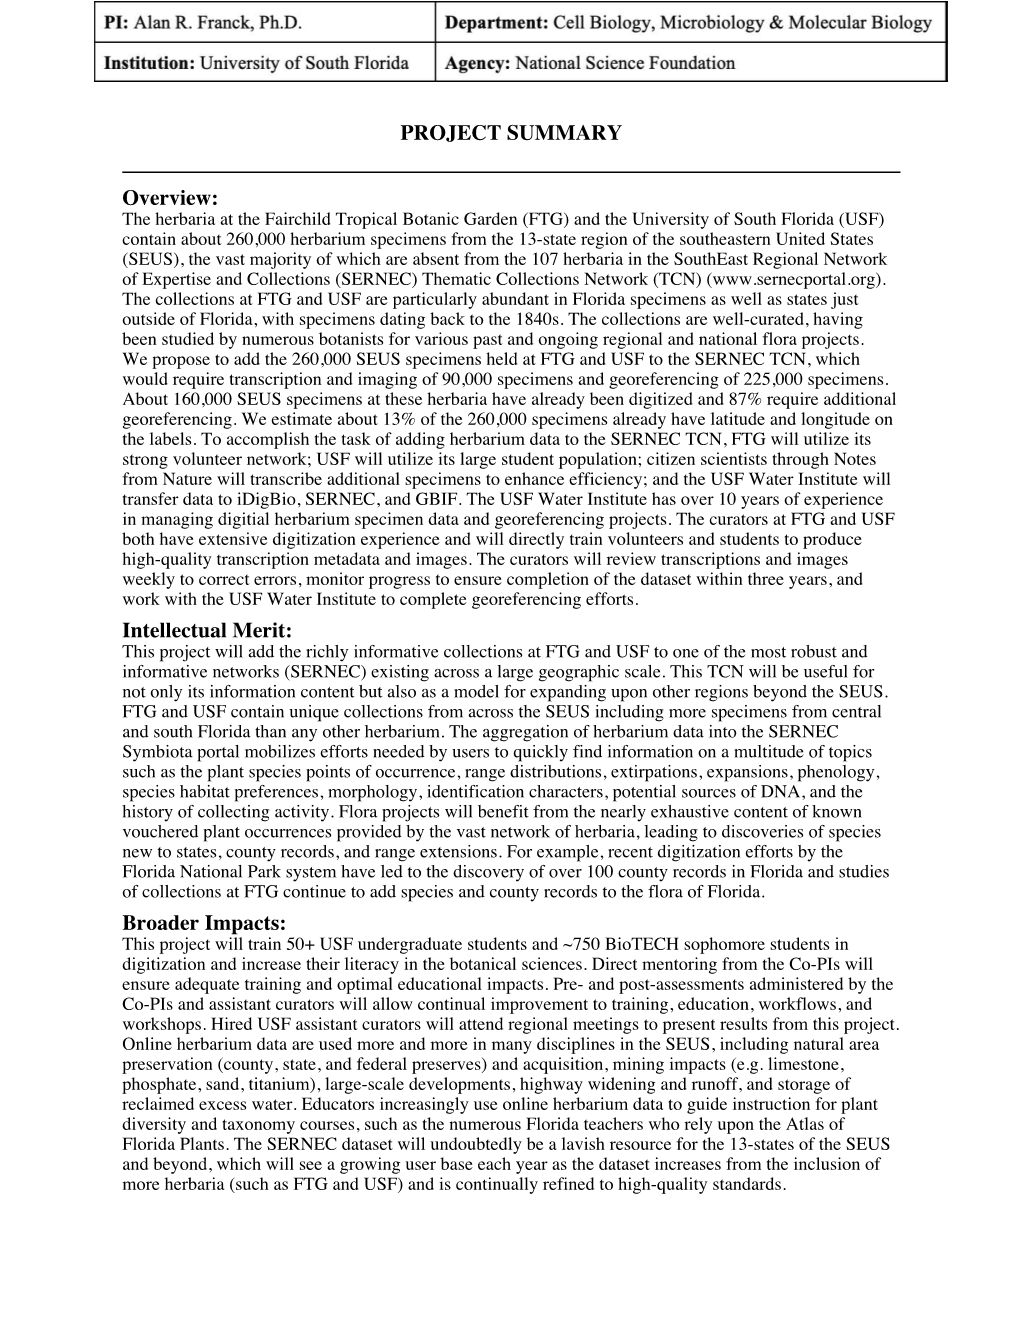 NSF Proposal (Biological Sciences